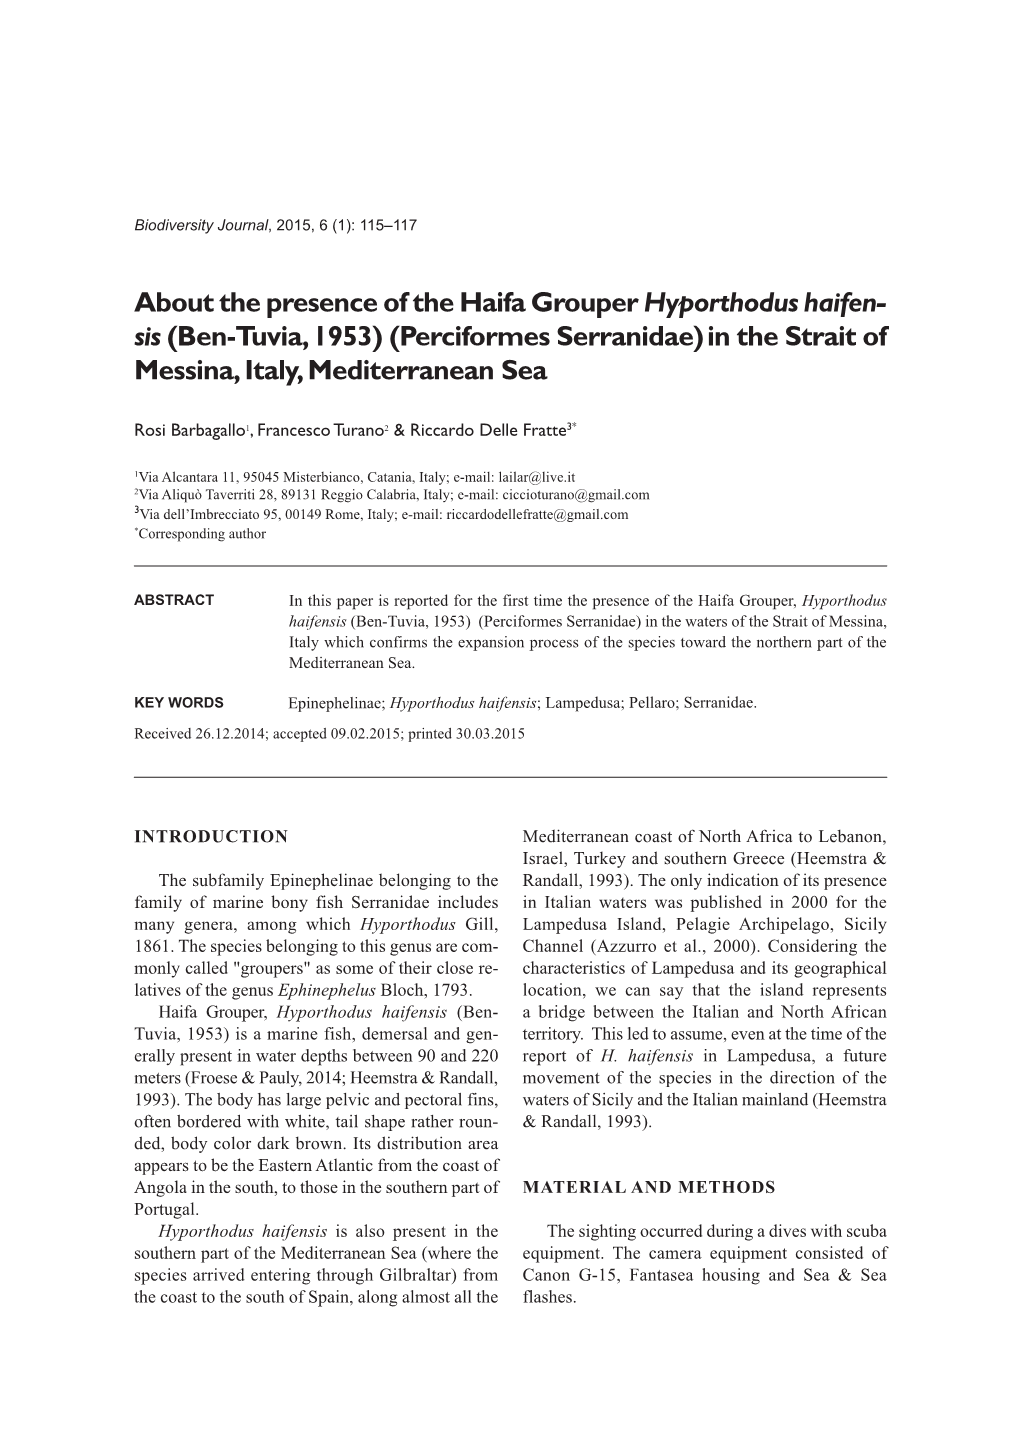 About the Presence of the Haifa Grouper Hyporthodus Haifen- Sis (Ben-Tuvia, 1953) (Perciformes Serranidae)In the Strait of Messina, Italy, Mediterranean Sea